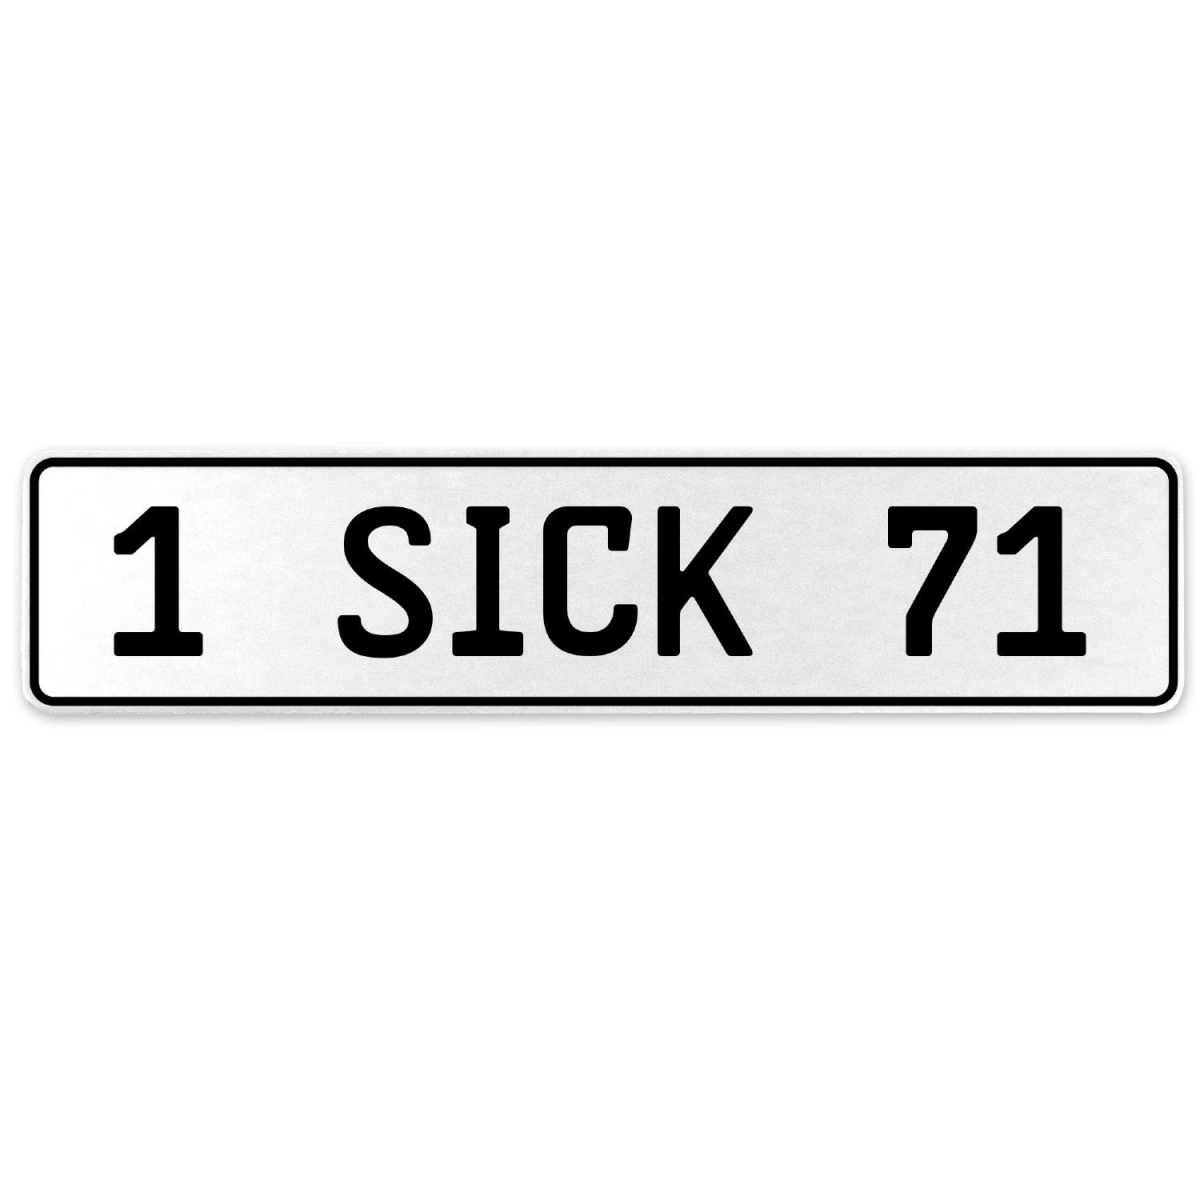 554470 1 Sick 71 - White Aluminum Street Sign Mancave Euro Plate Name Door Sign Wall